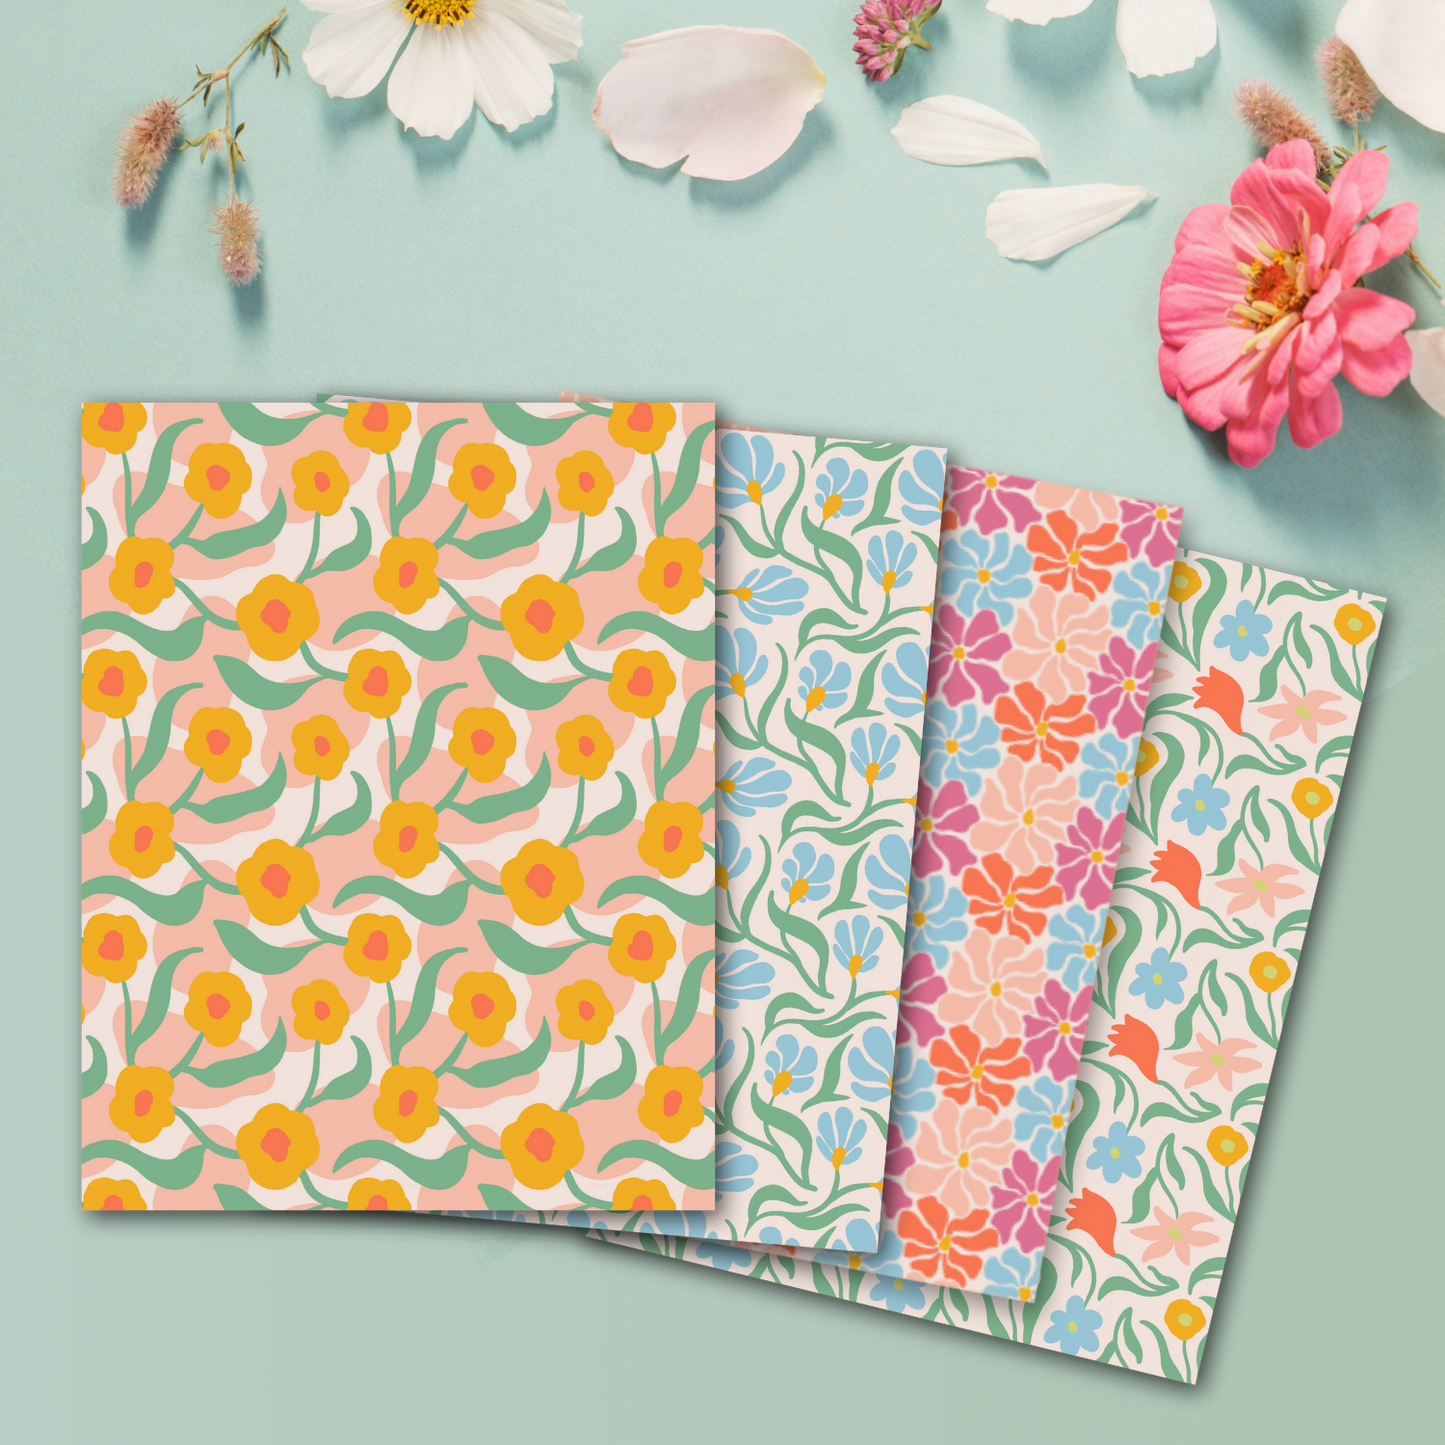 Floral Medley #1 Transfer Sheets